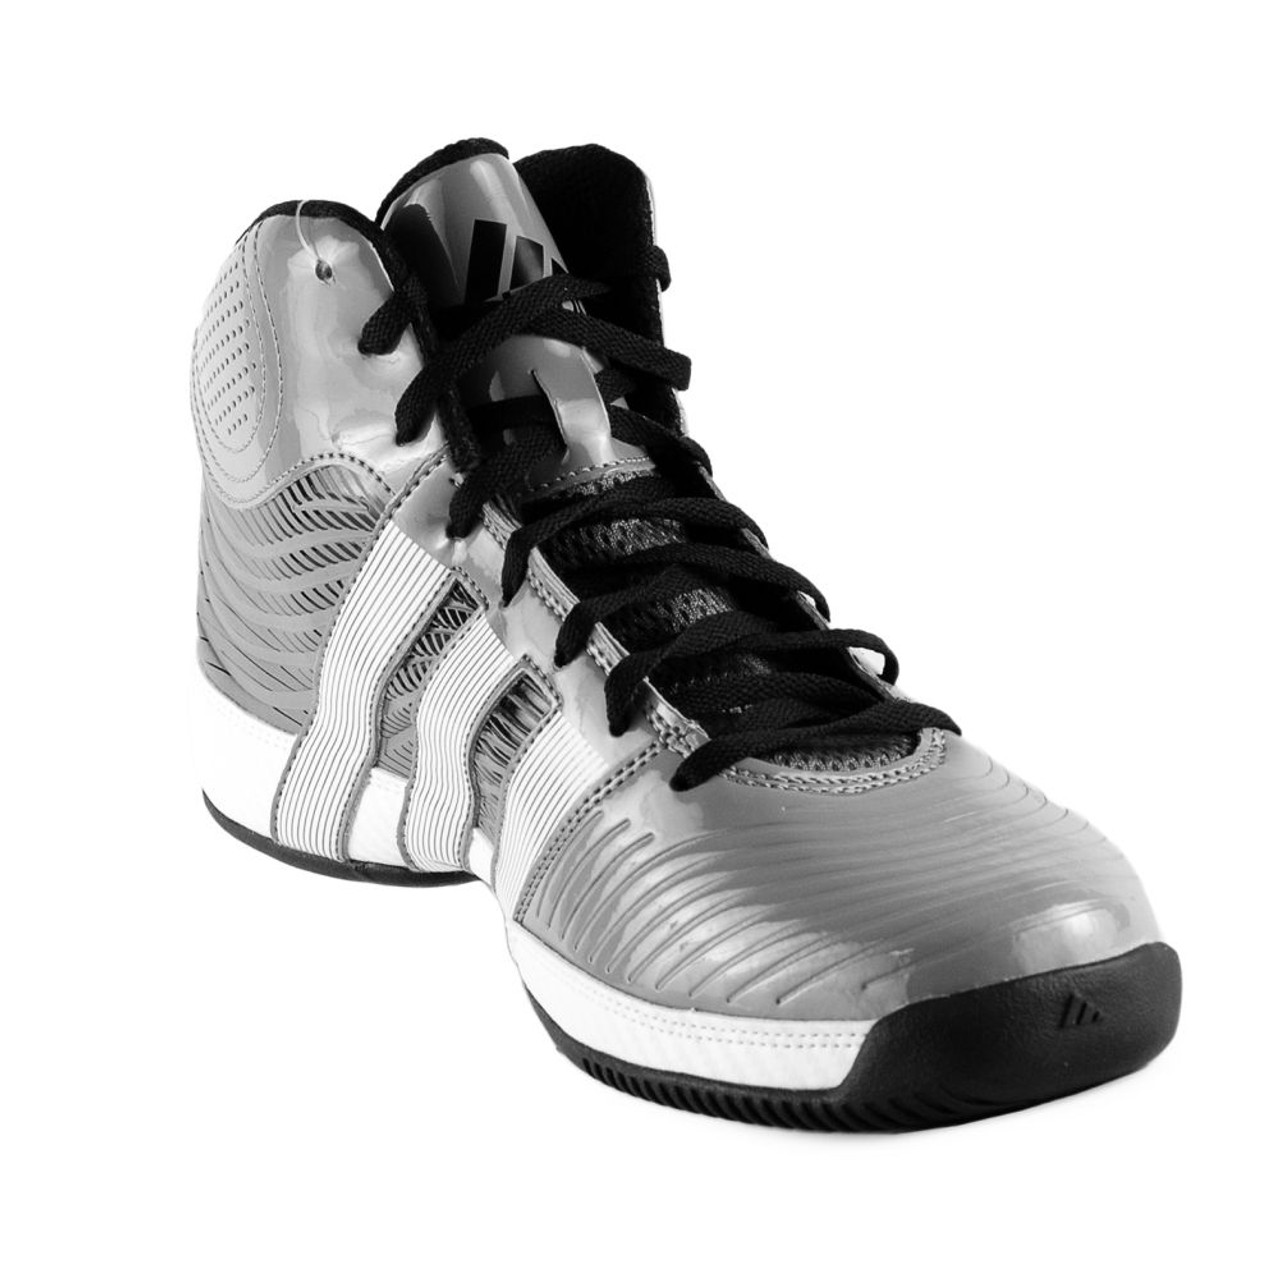 Adidas Commander TD 4 Grey/White/Black Mens Basketball Shoes - Grey/White/Black | Discount Adidas Men's Athletic & More - Shoolu.com | Shoolu.com